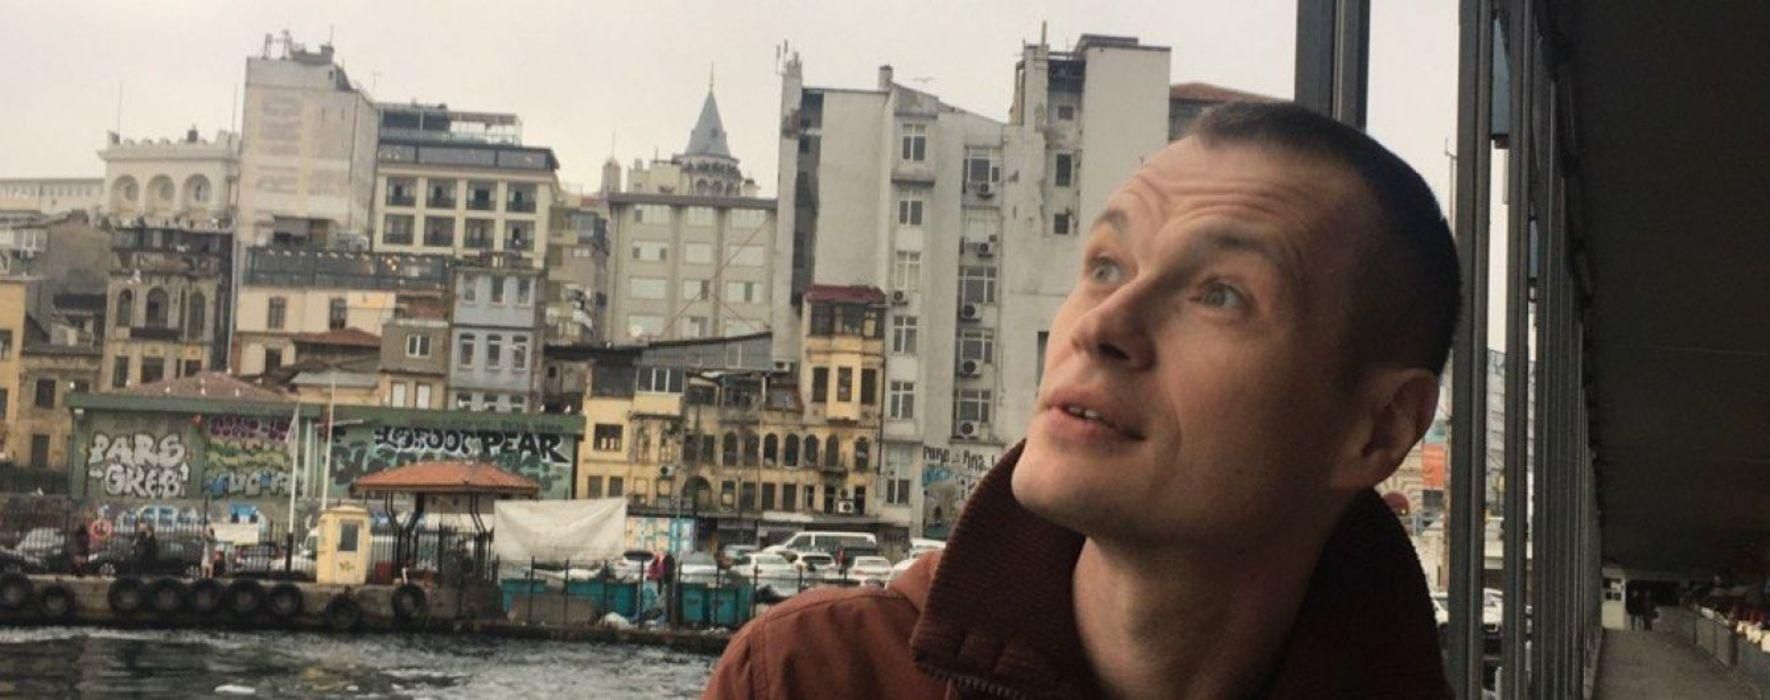 Умер журналист Олег Тудан: причина смерти - рак